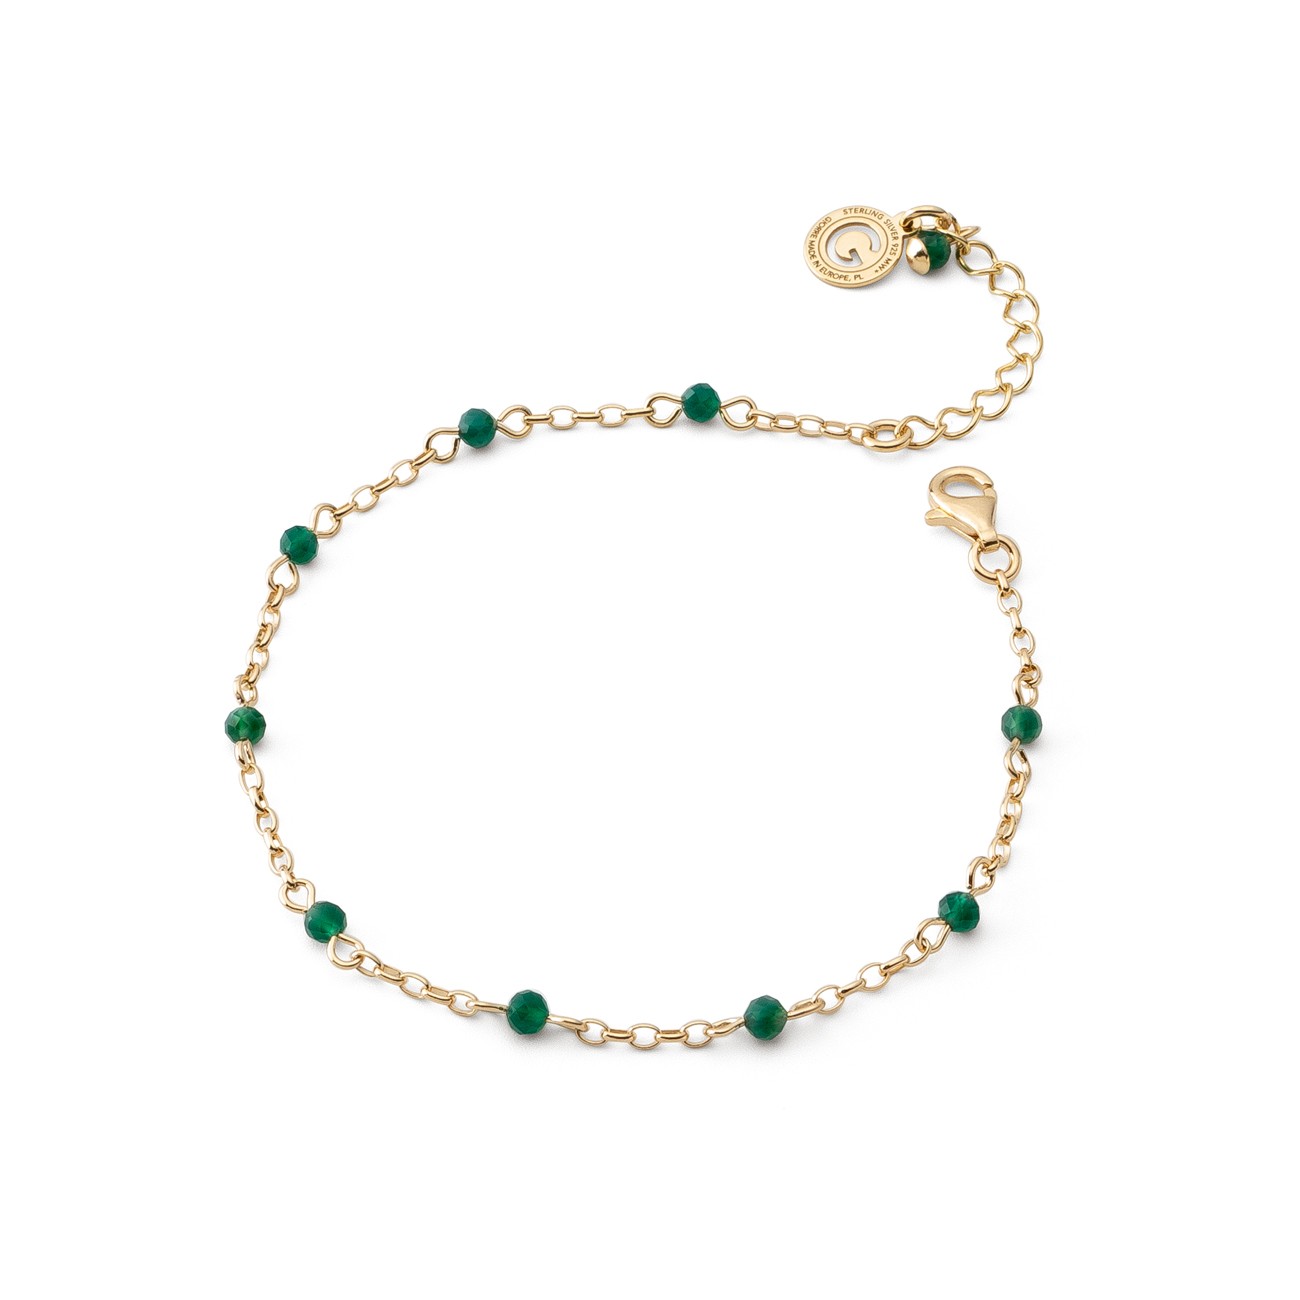 Green onyx stone ankle bracelet, sterling silver 925